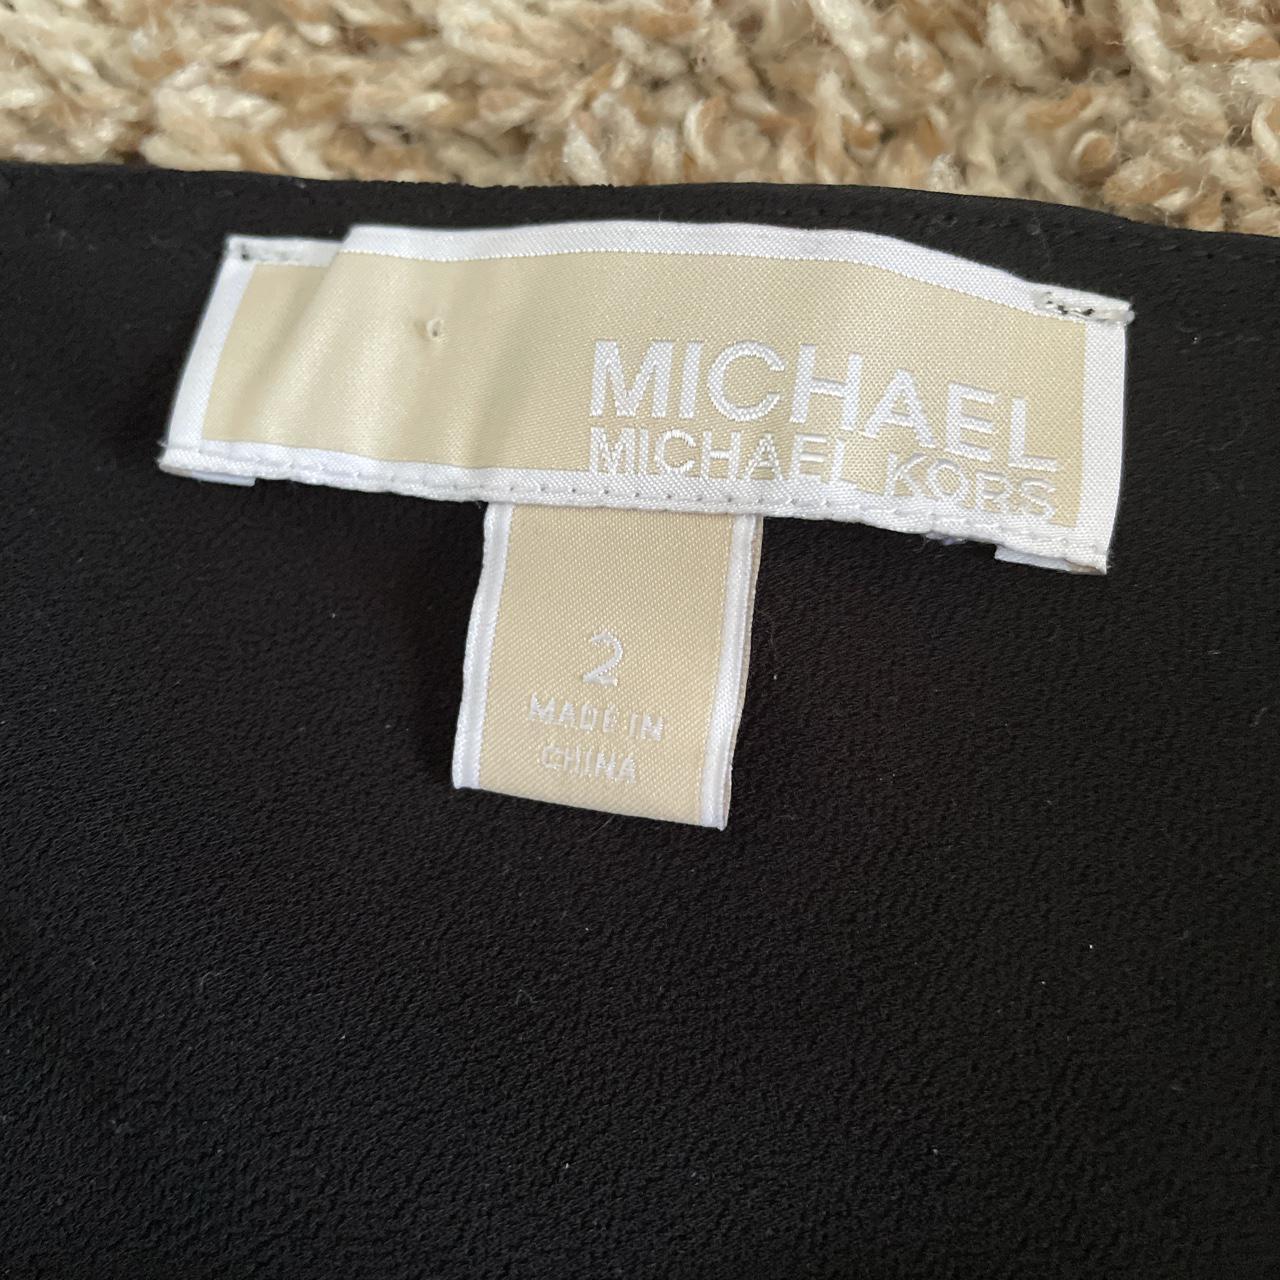 Product Image 4 - Black slip dress 🥀

Michael Kors